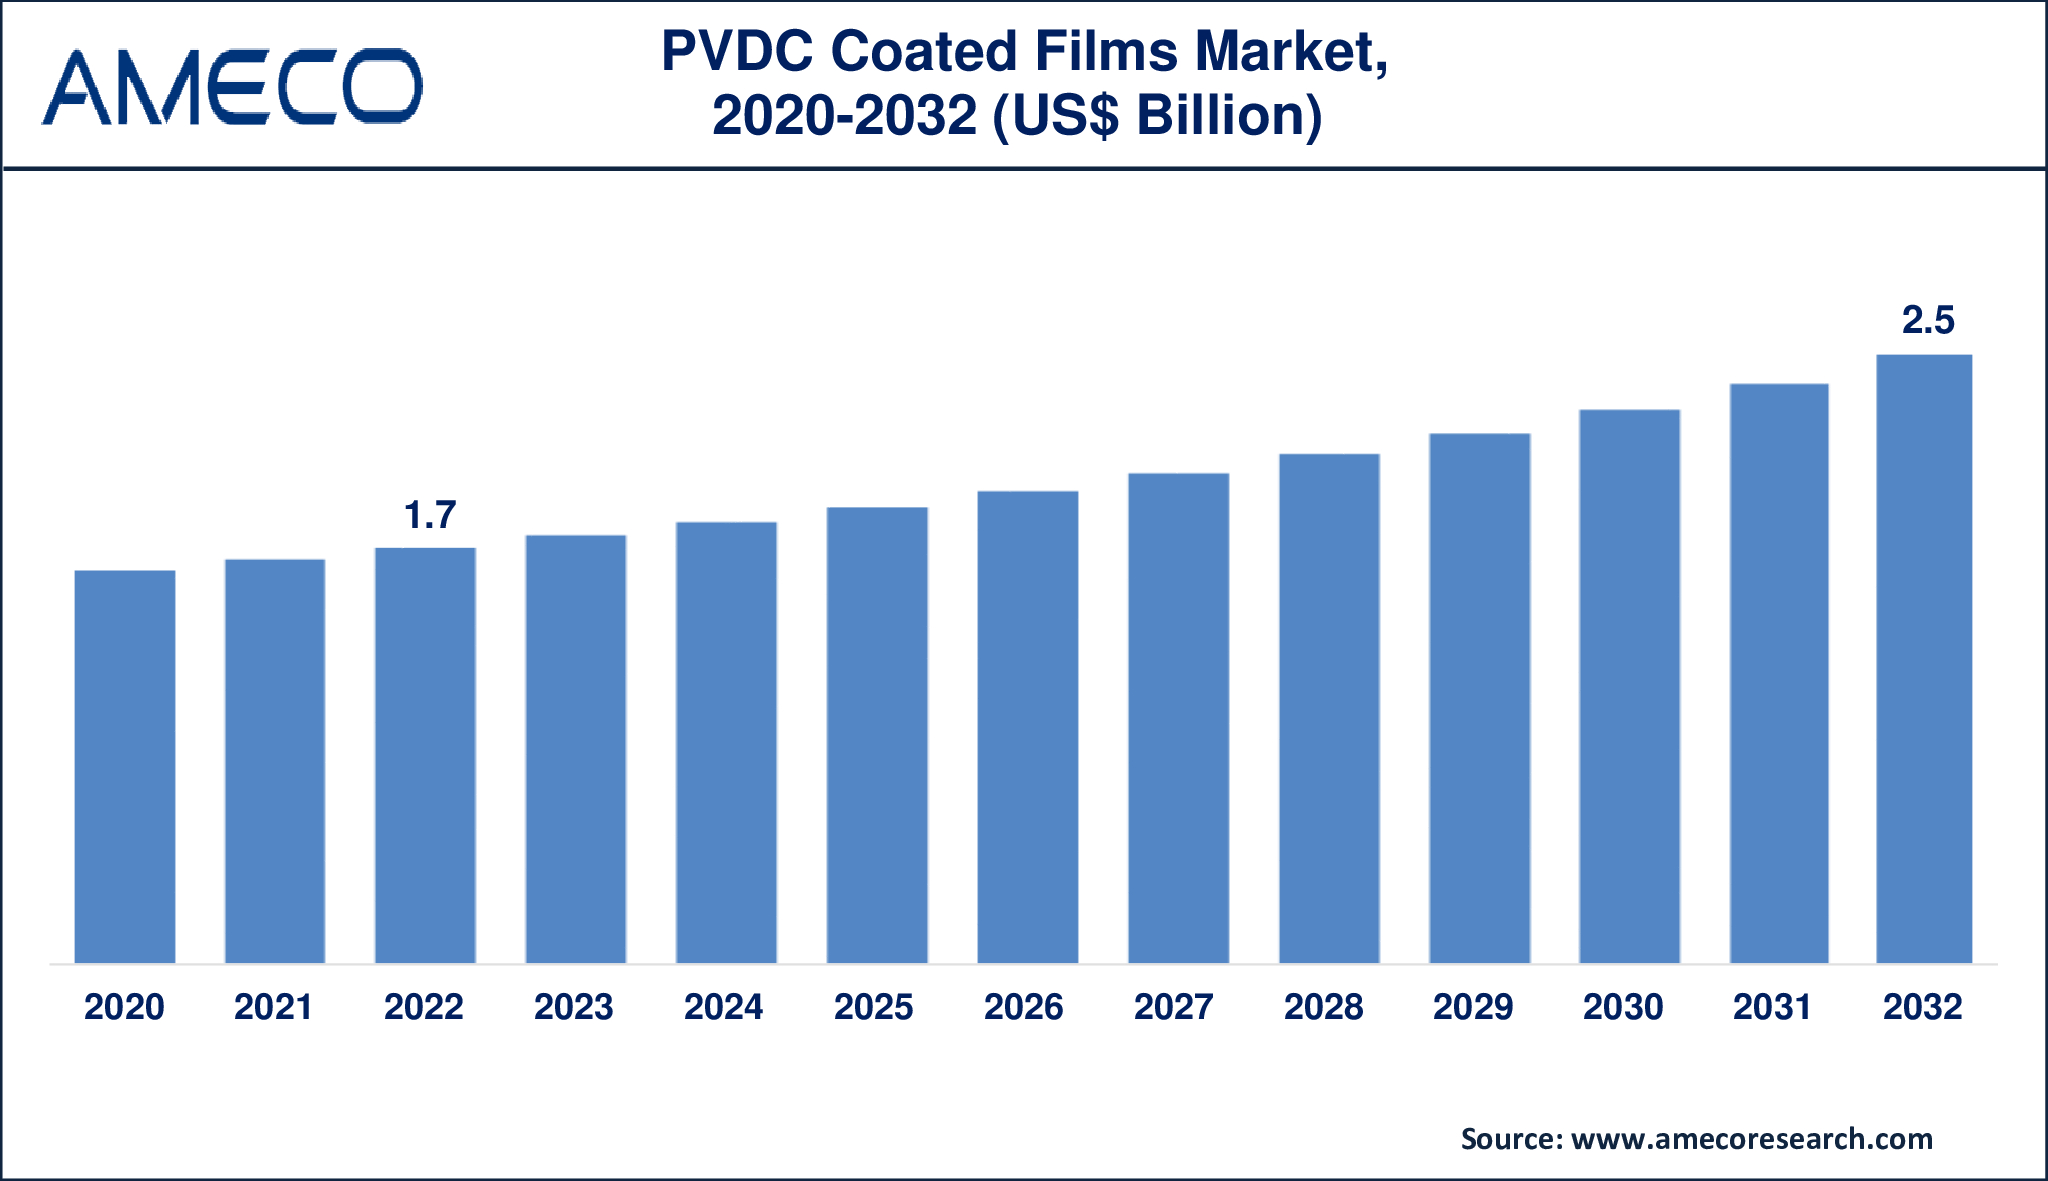 PVDC Coated Films Market Dynamics